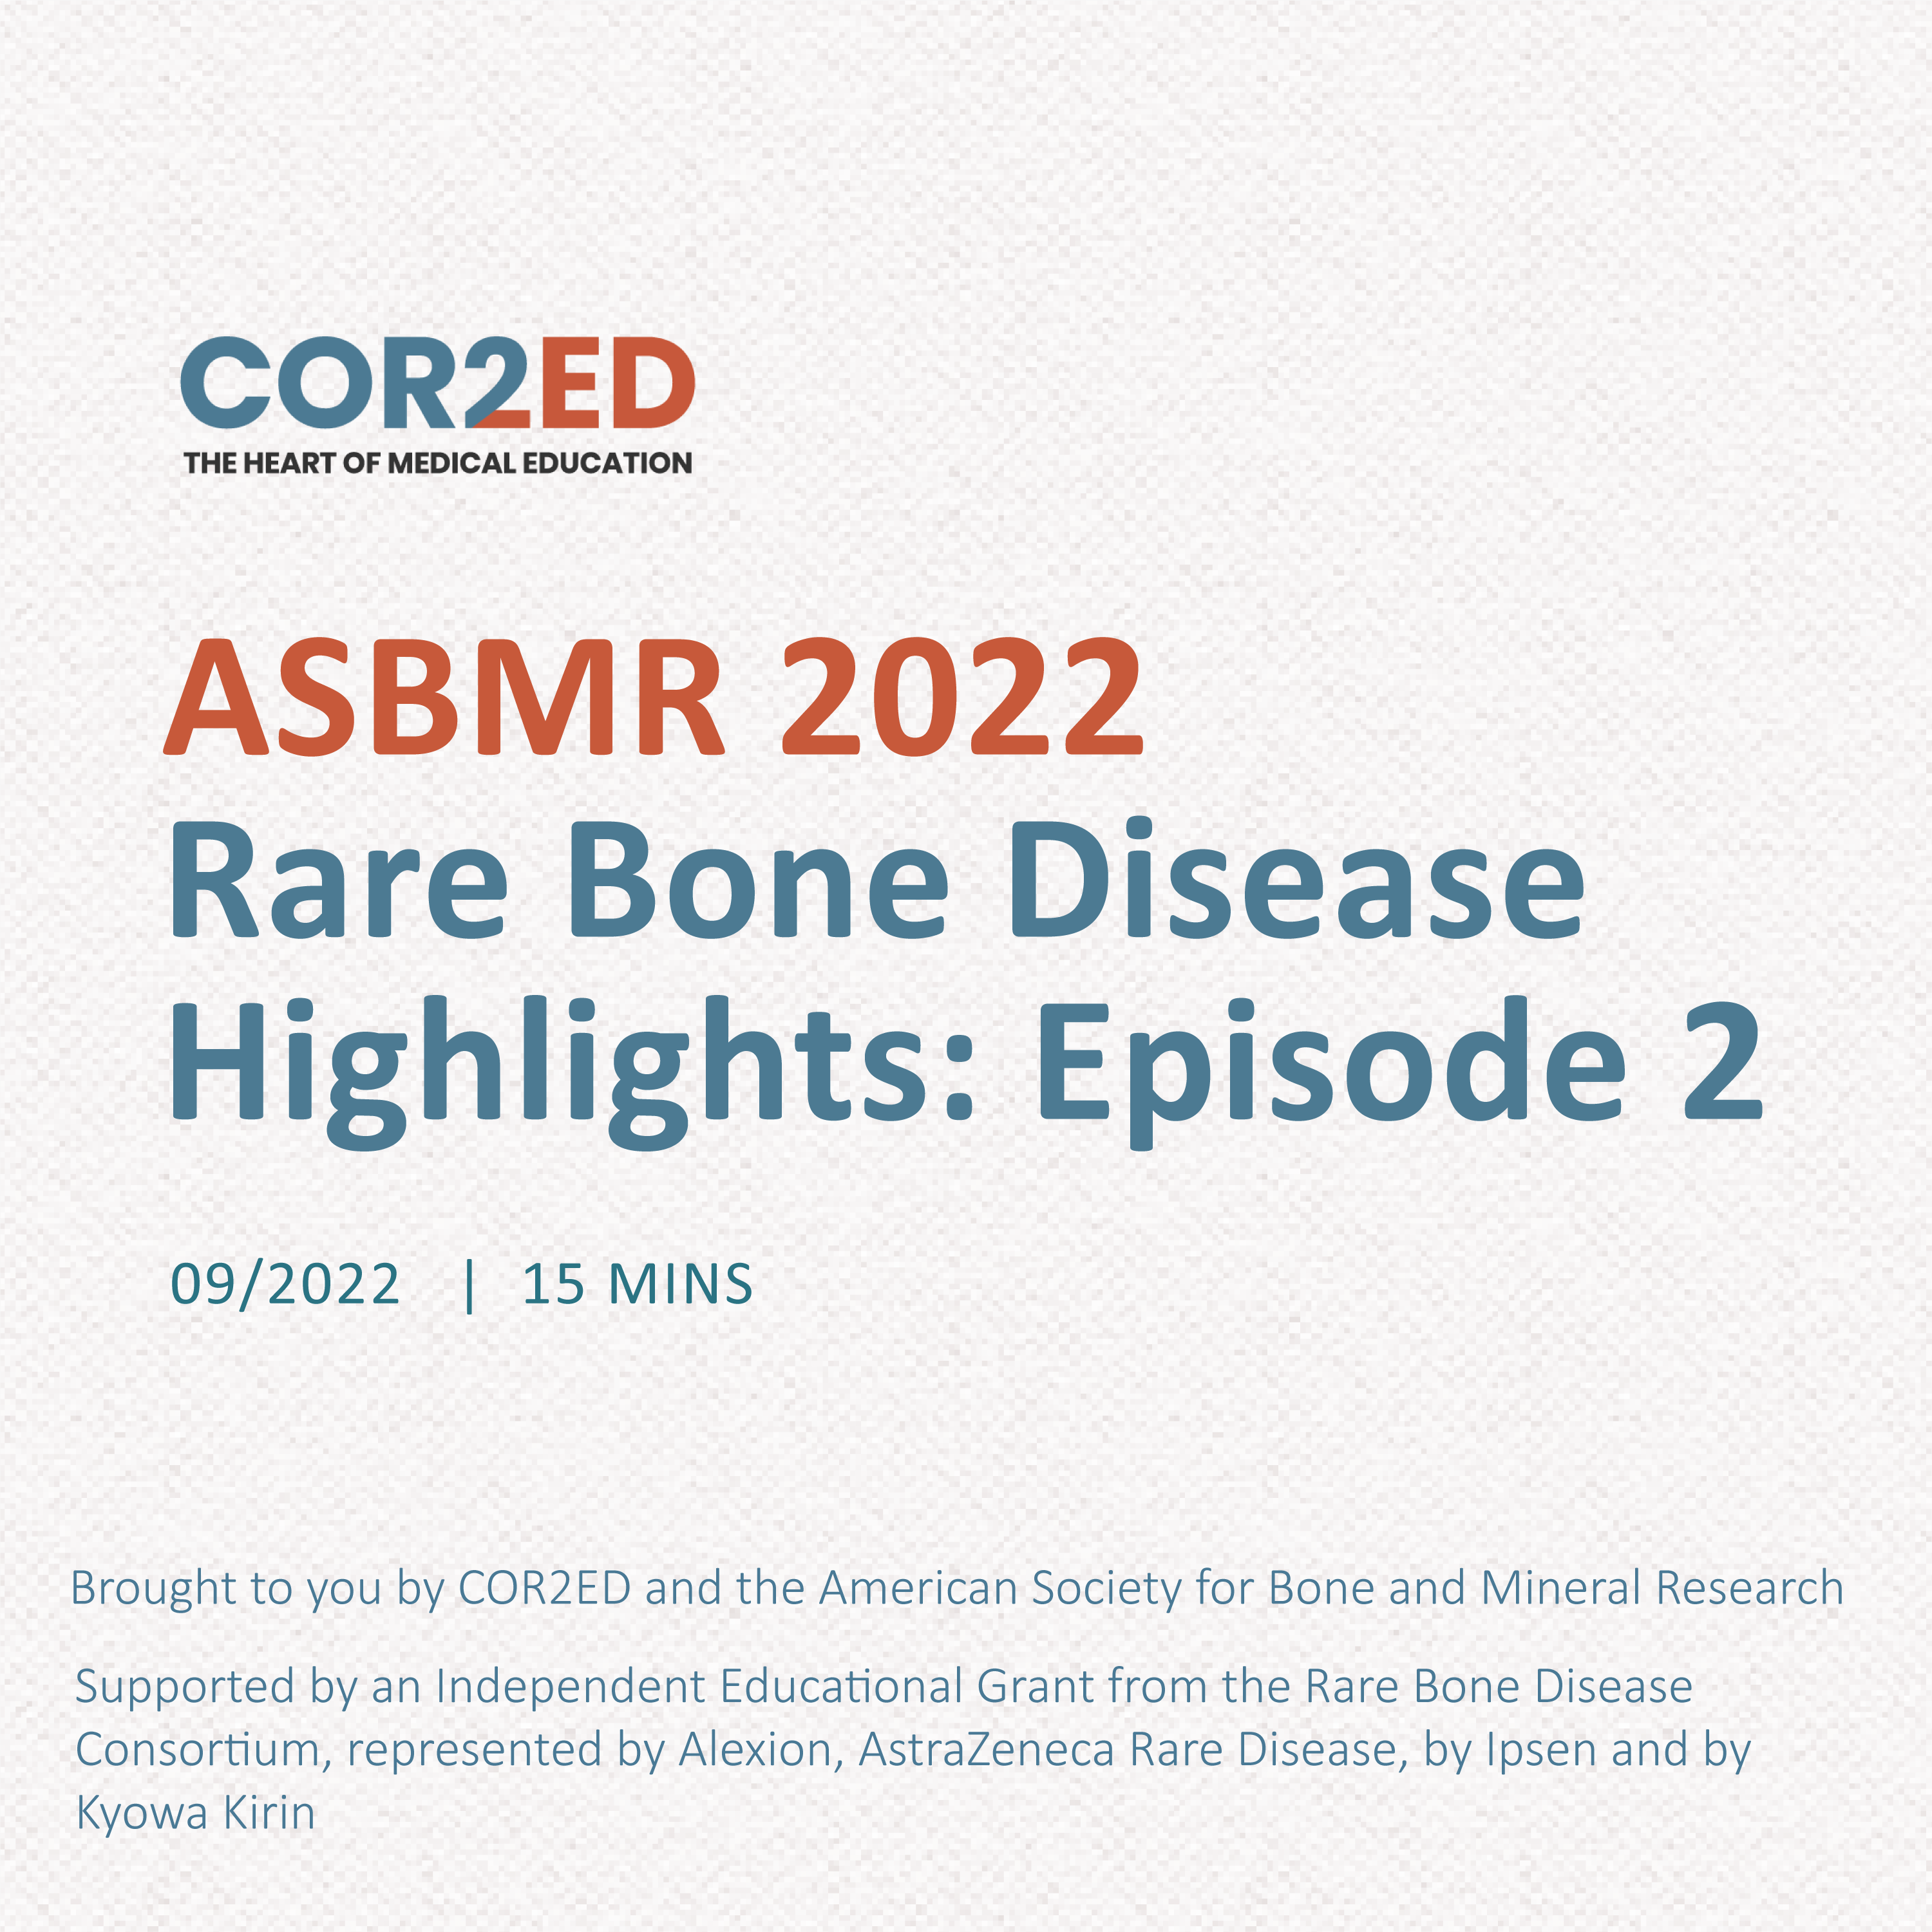 ASBMR 2022 Rare Bone Disease Highlights: Episode 2